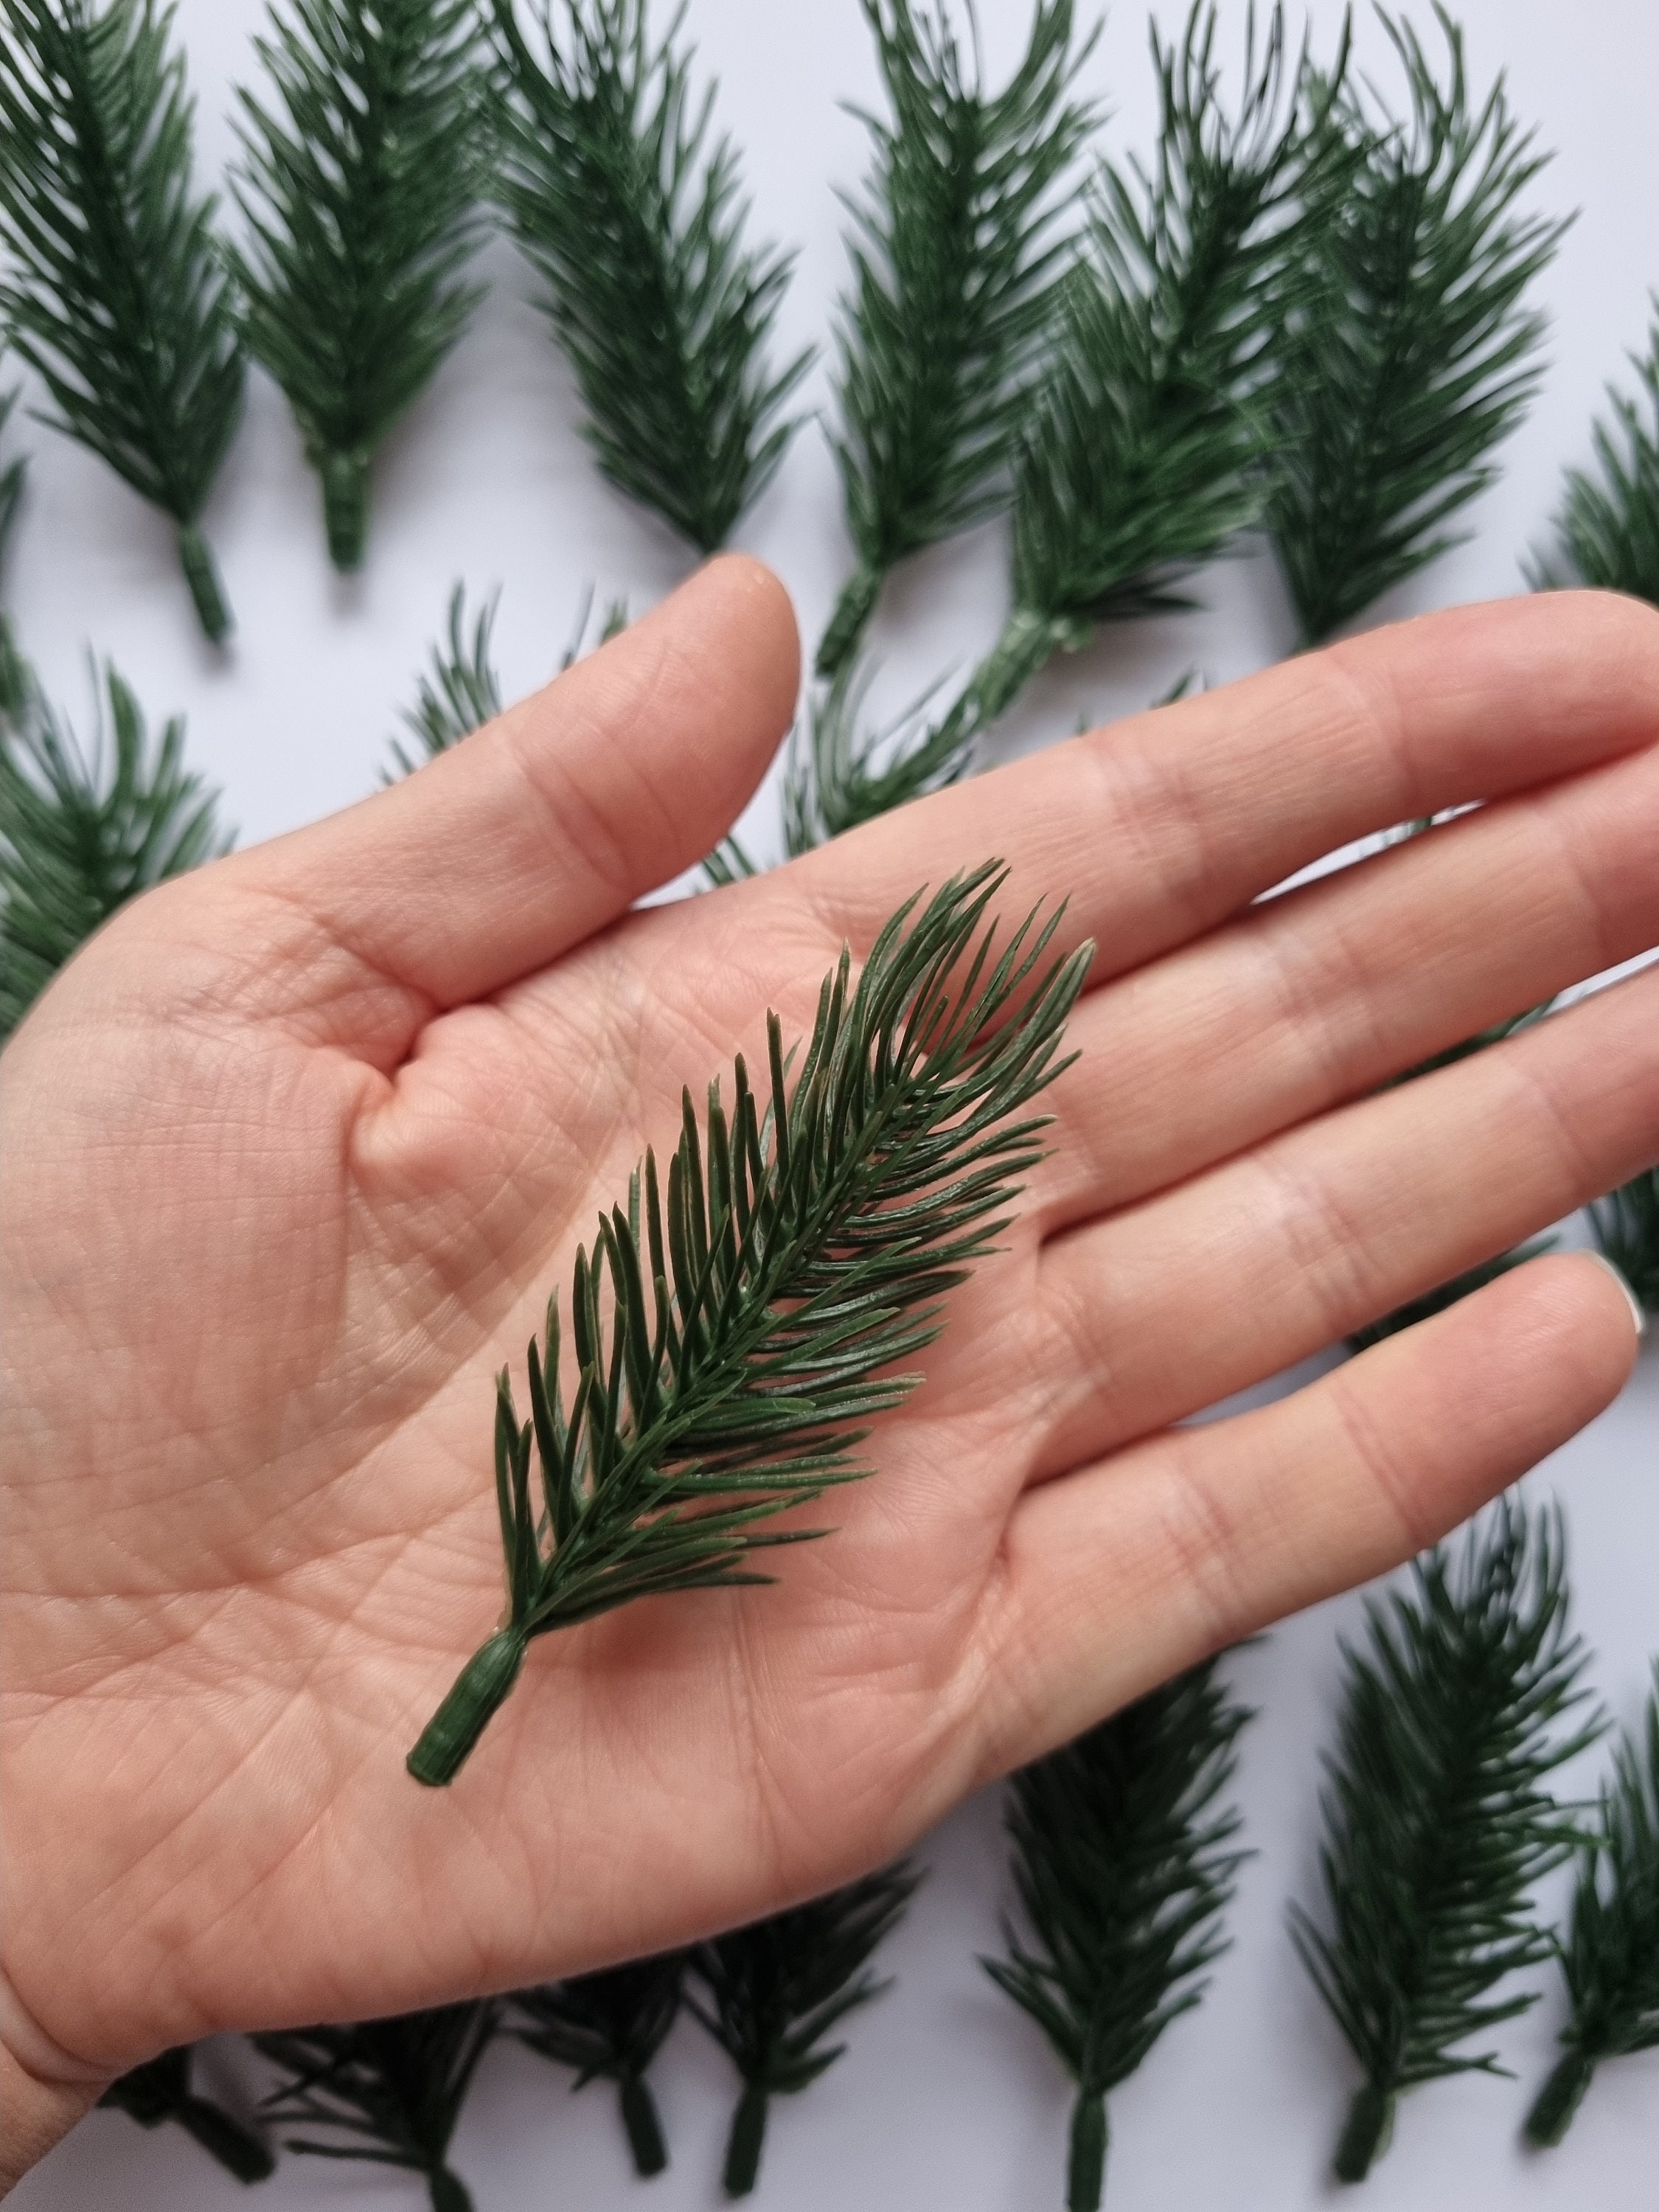 10/5PCS Christmas Snow Pine Branches Artificial Pine Needles DIY